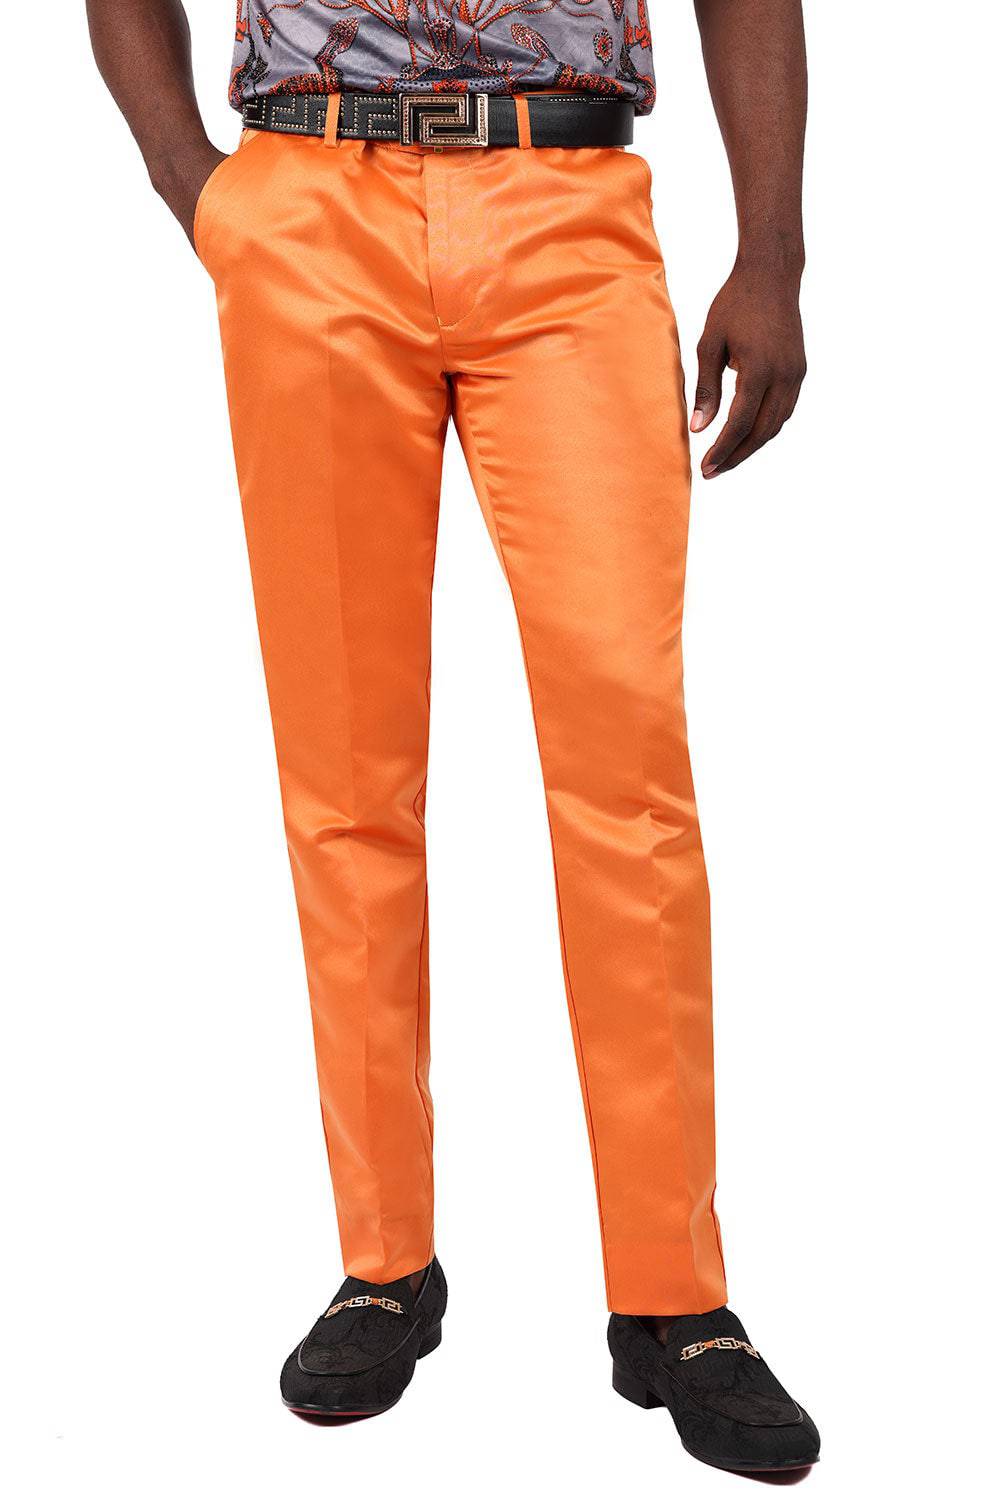 BARABAS Men's Solid Color Plain Shiny Chino Dress Pants 3CP02 Orange